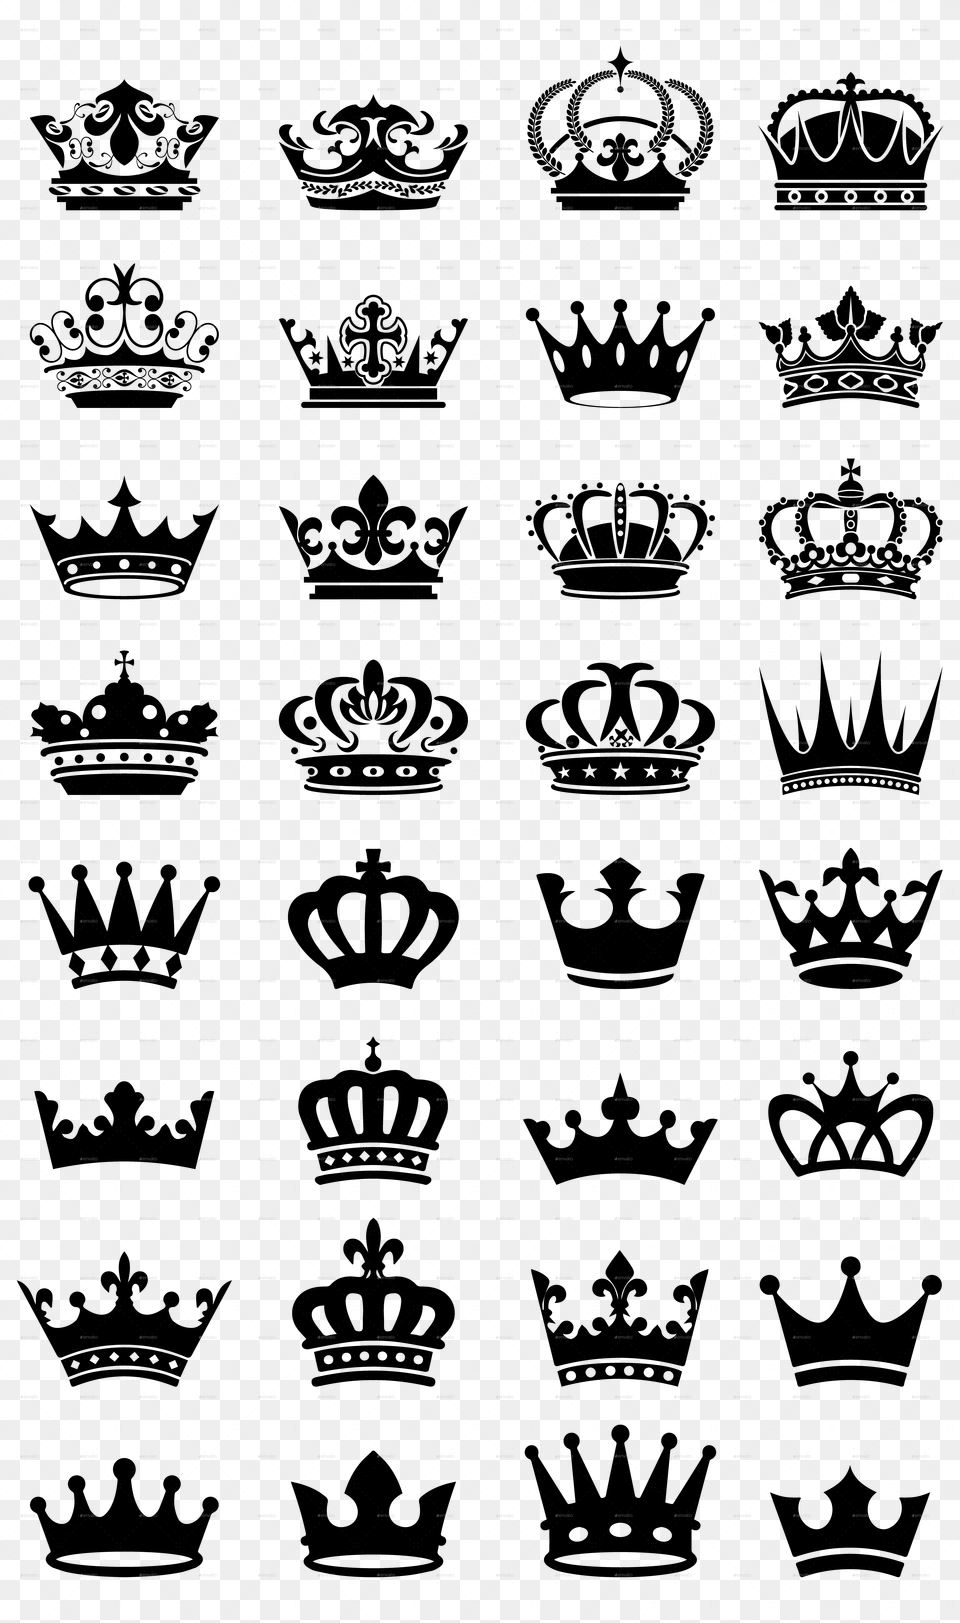 Royal Black Crowns Black Crowns Crown Black And White, Pattern Png Image